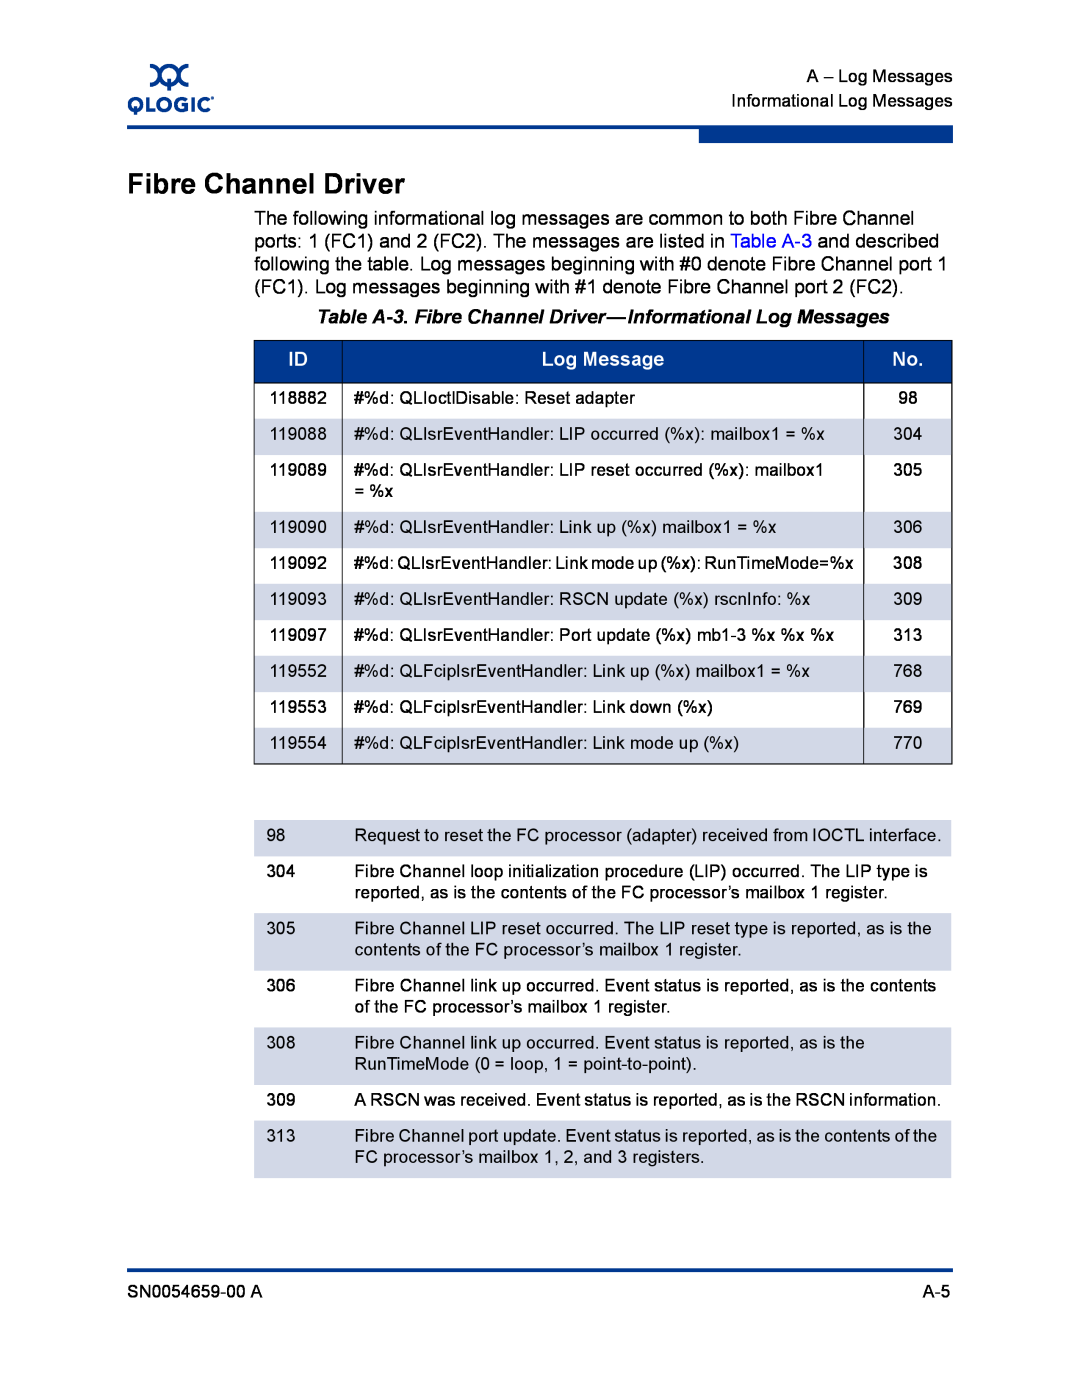 Q-Logic ISR6142 manual Table A-3. Fibre Channel Driver-Informational Log Messages 